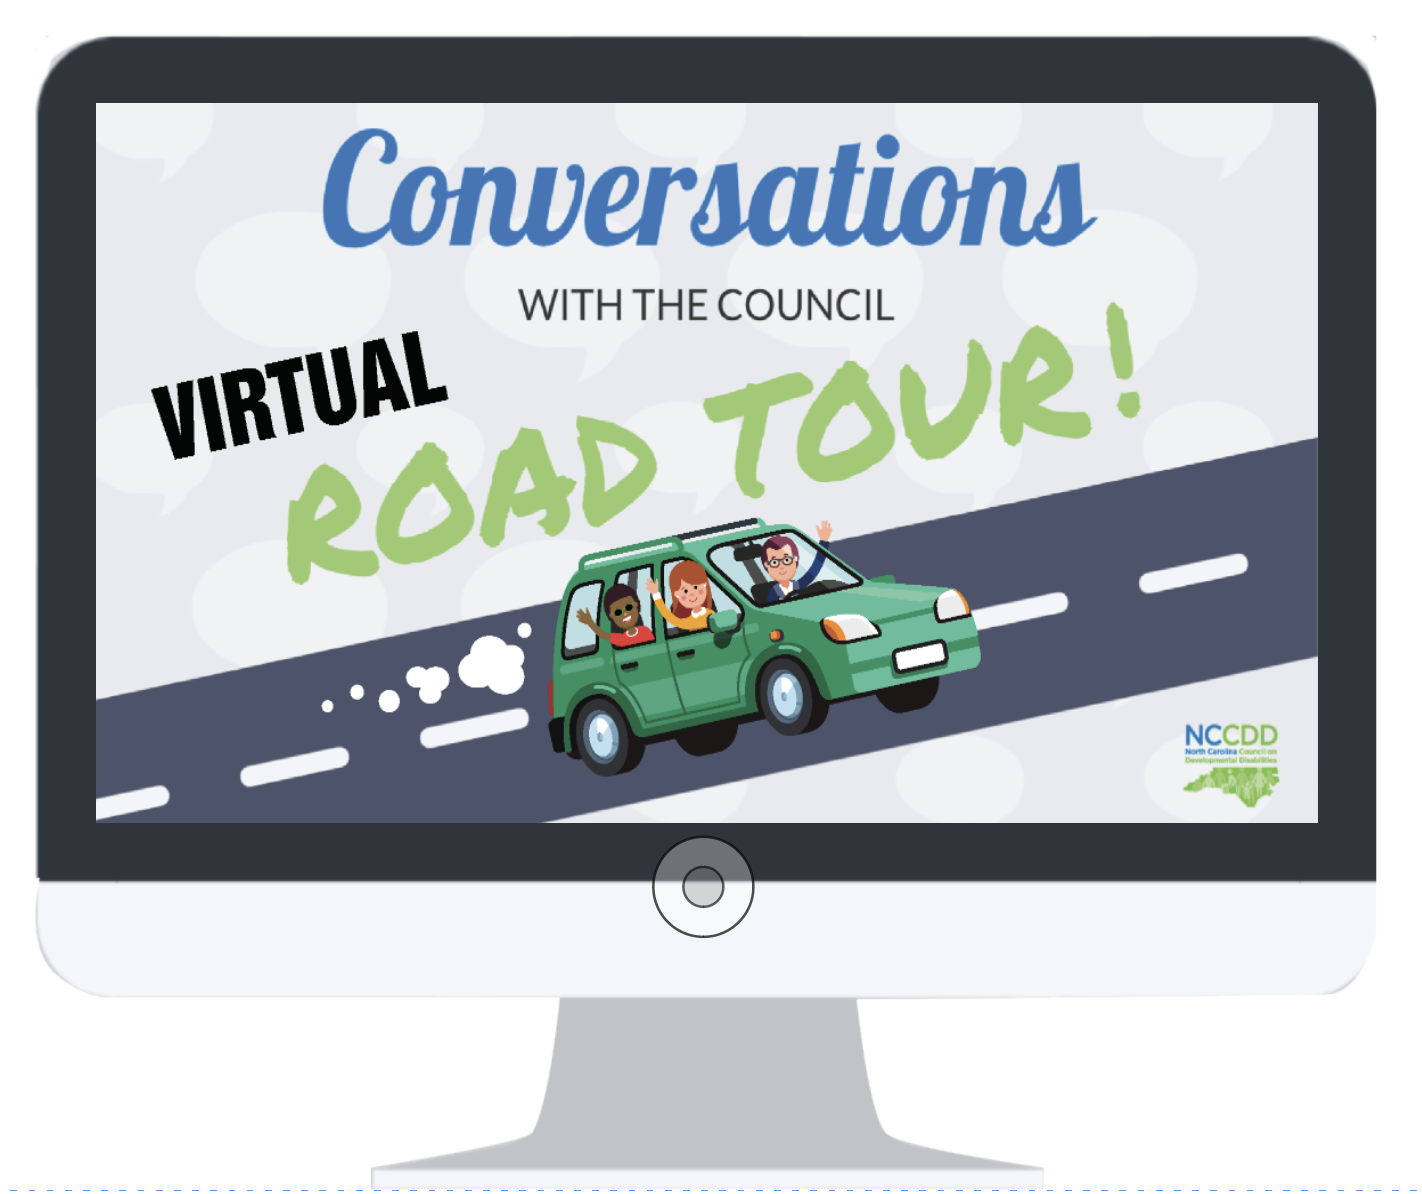 Virtual Road Tour sil